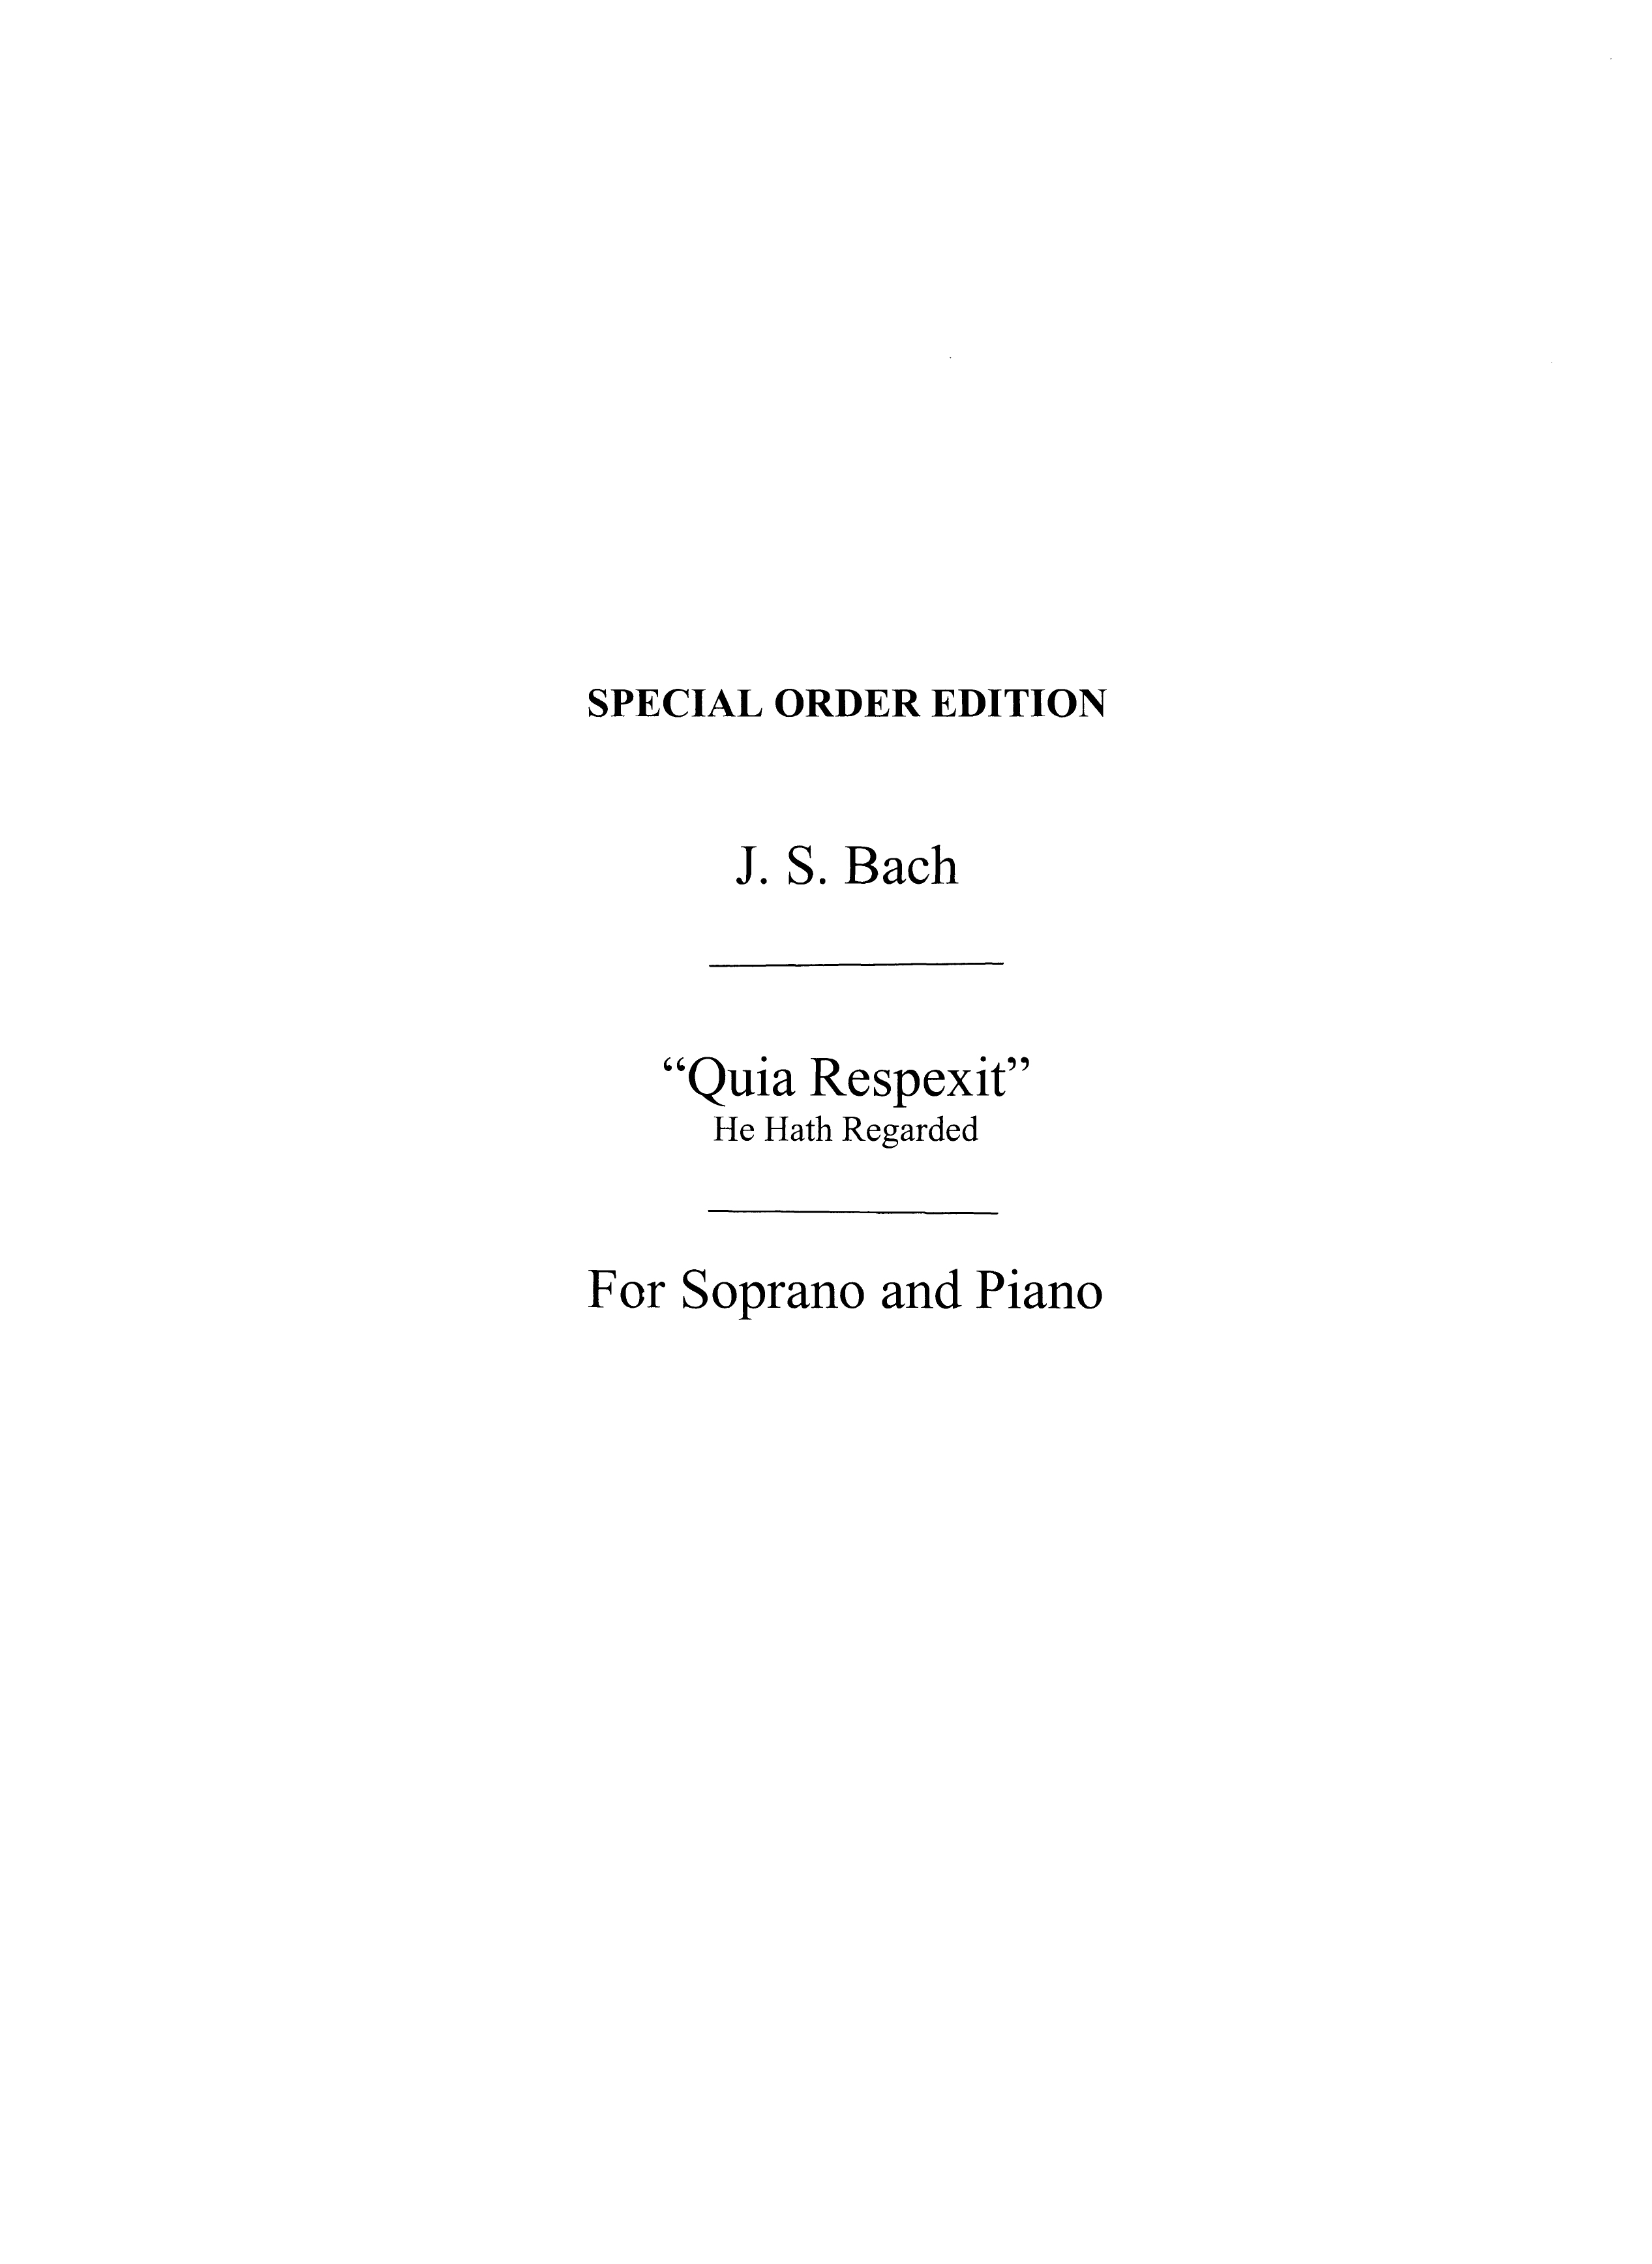 Johann Sebastian Bach: Quia Respexit (He Hath Regarded)